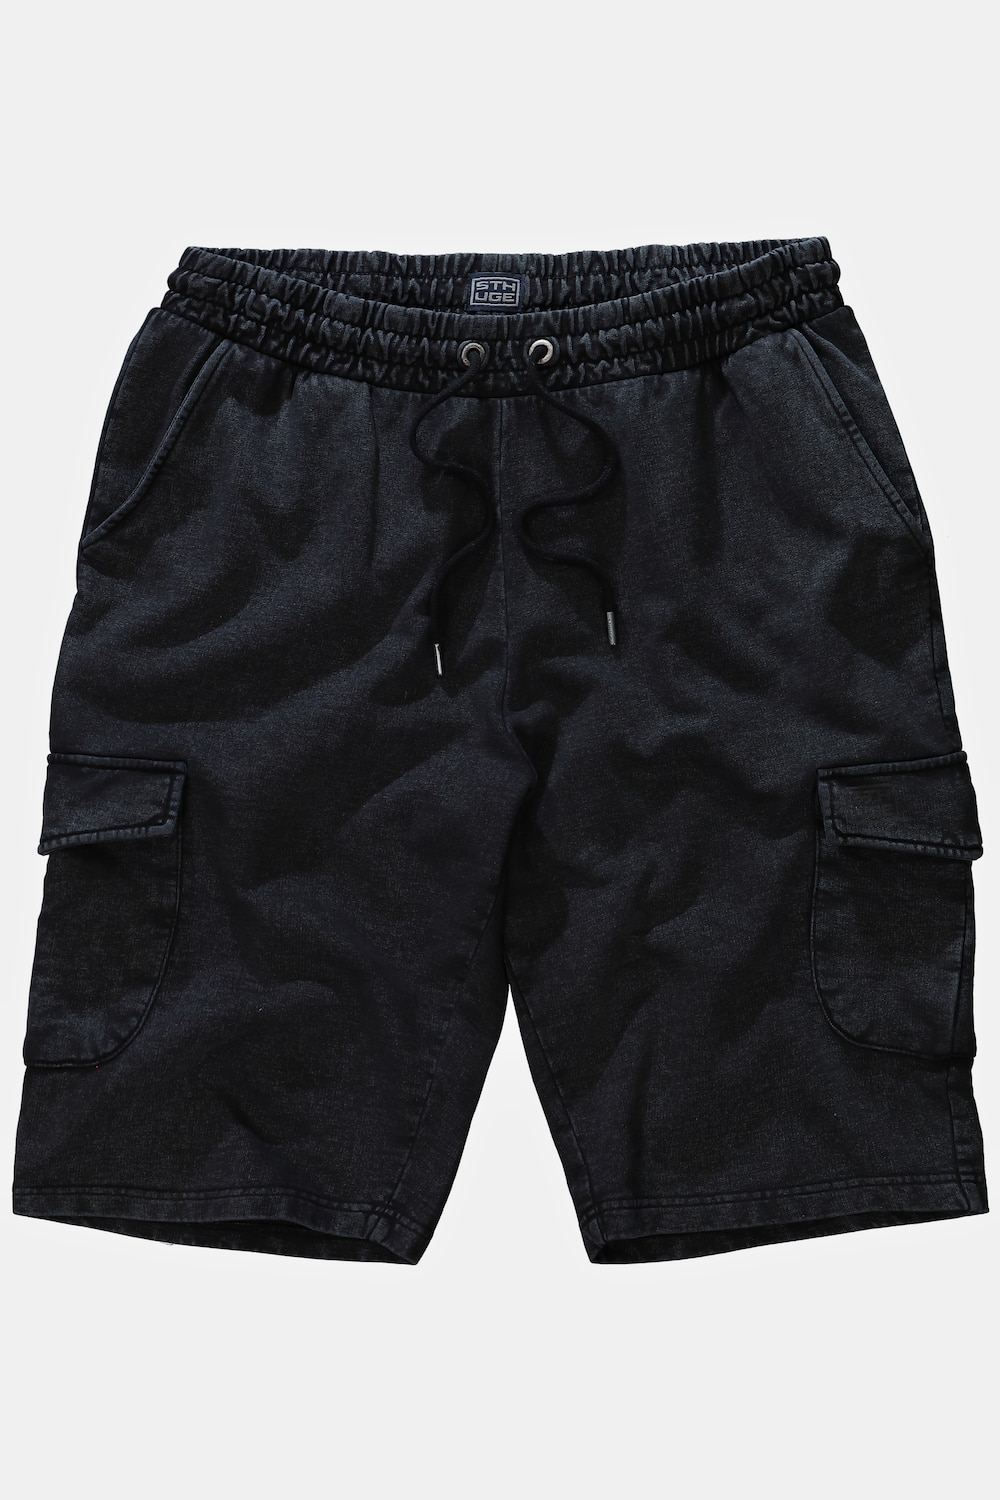 Plus Size STHUGE Cargo Bermuda Shorts, Woman, black, size: 5XL, cotton/polyester, STHUGE